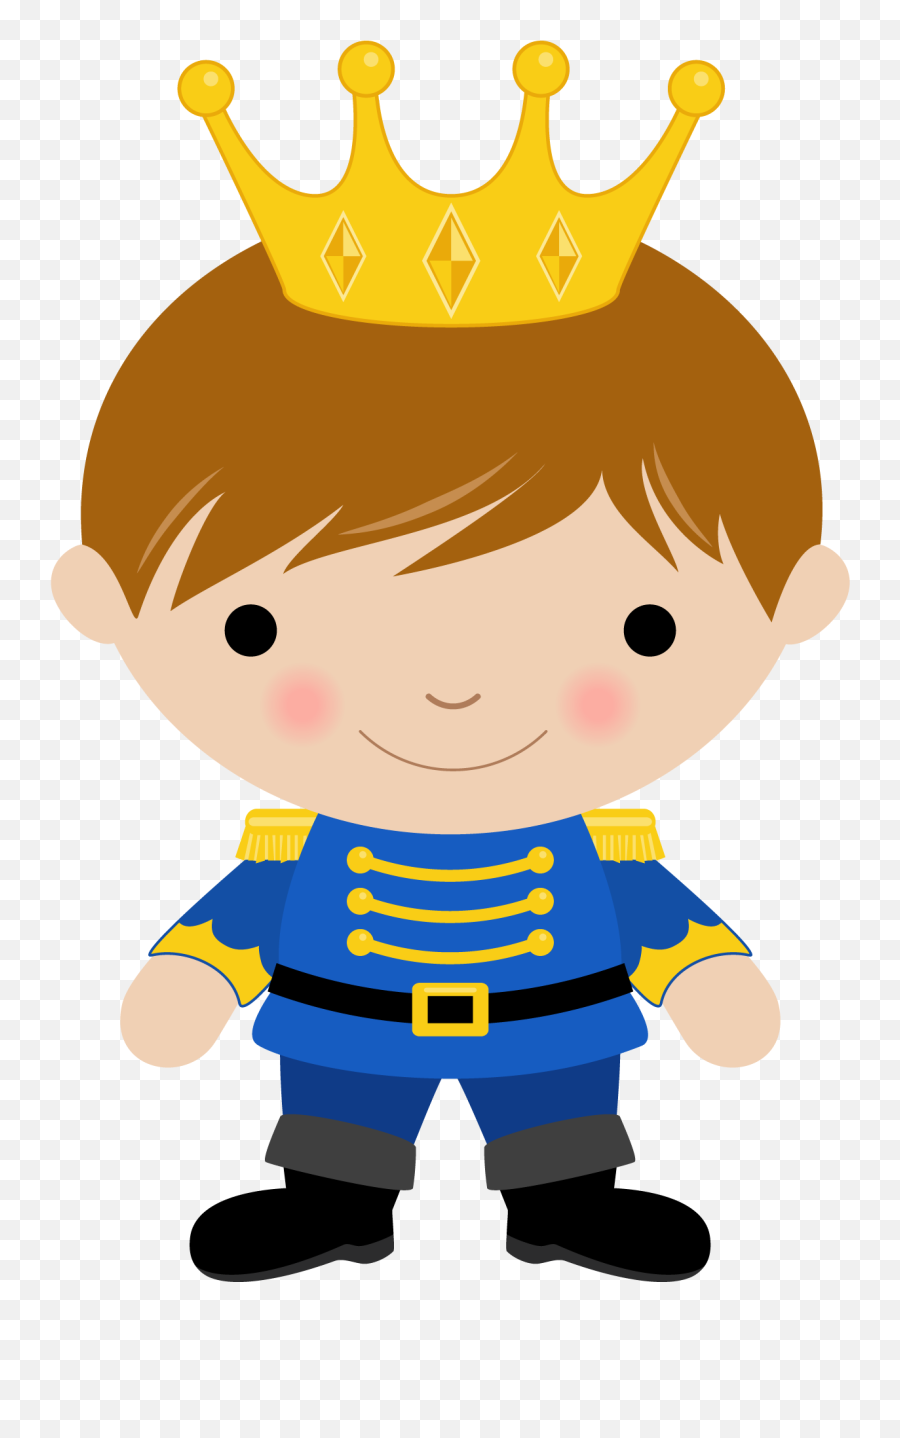 Printable Crafts Printables Prince Crown Prince - Prince Prince With Crown Clipart Emoji,Crafts Clipart